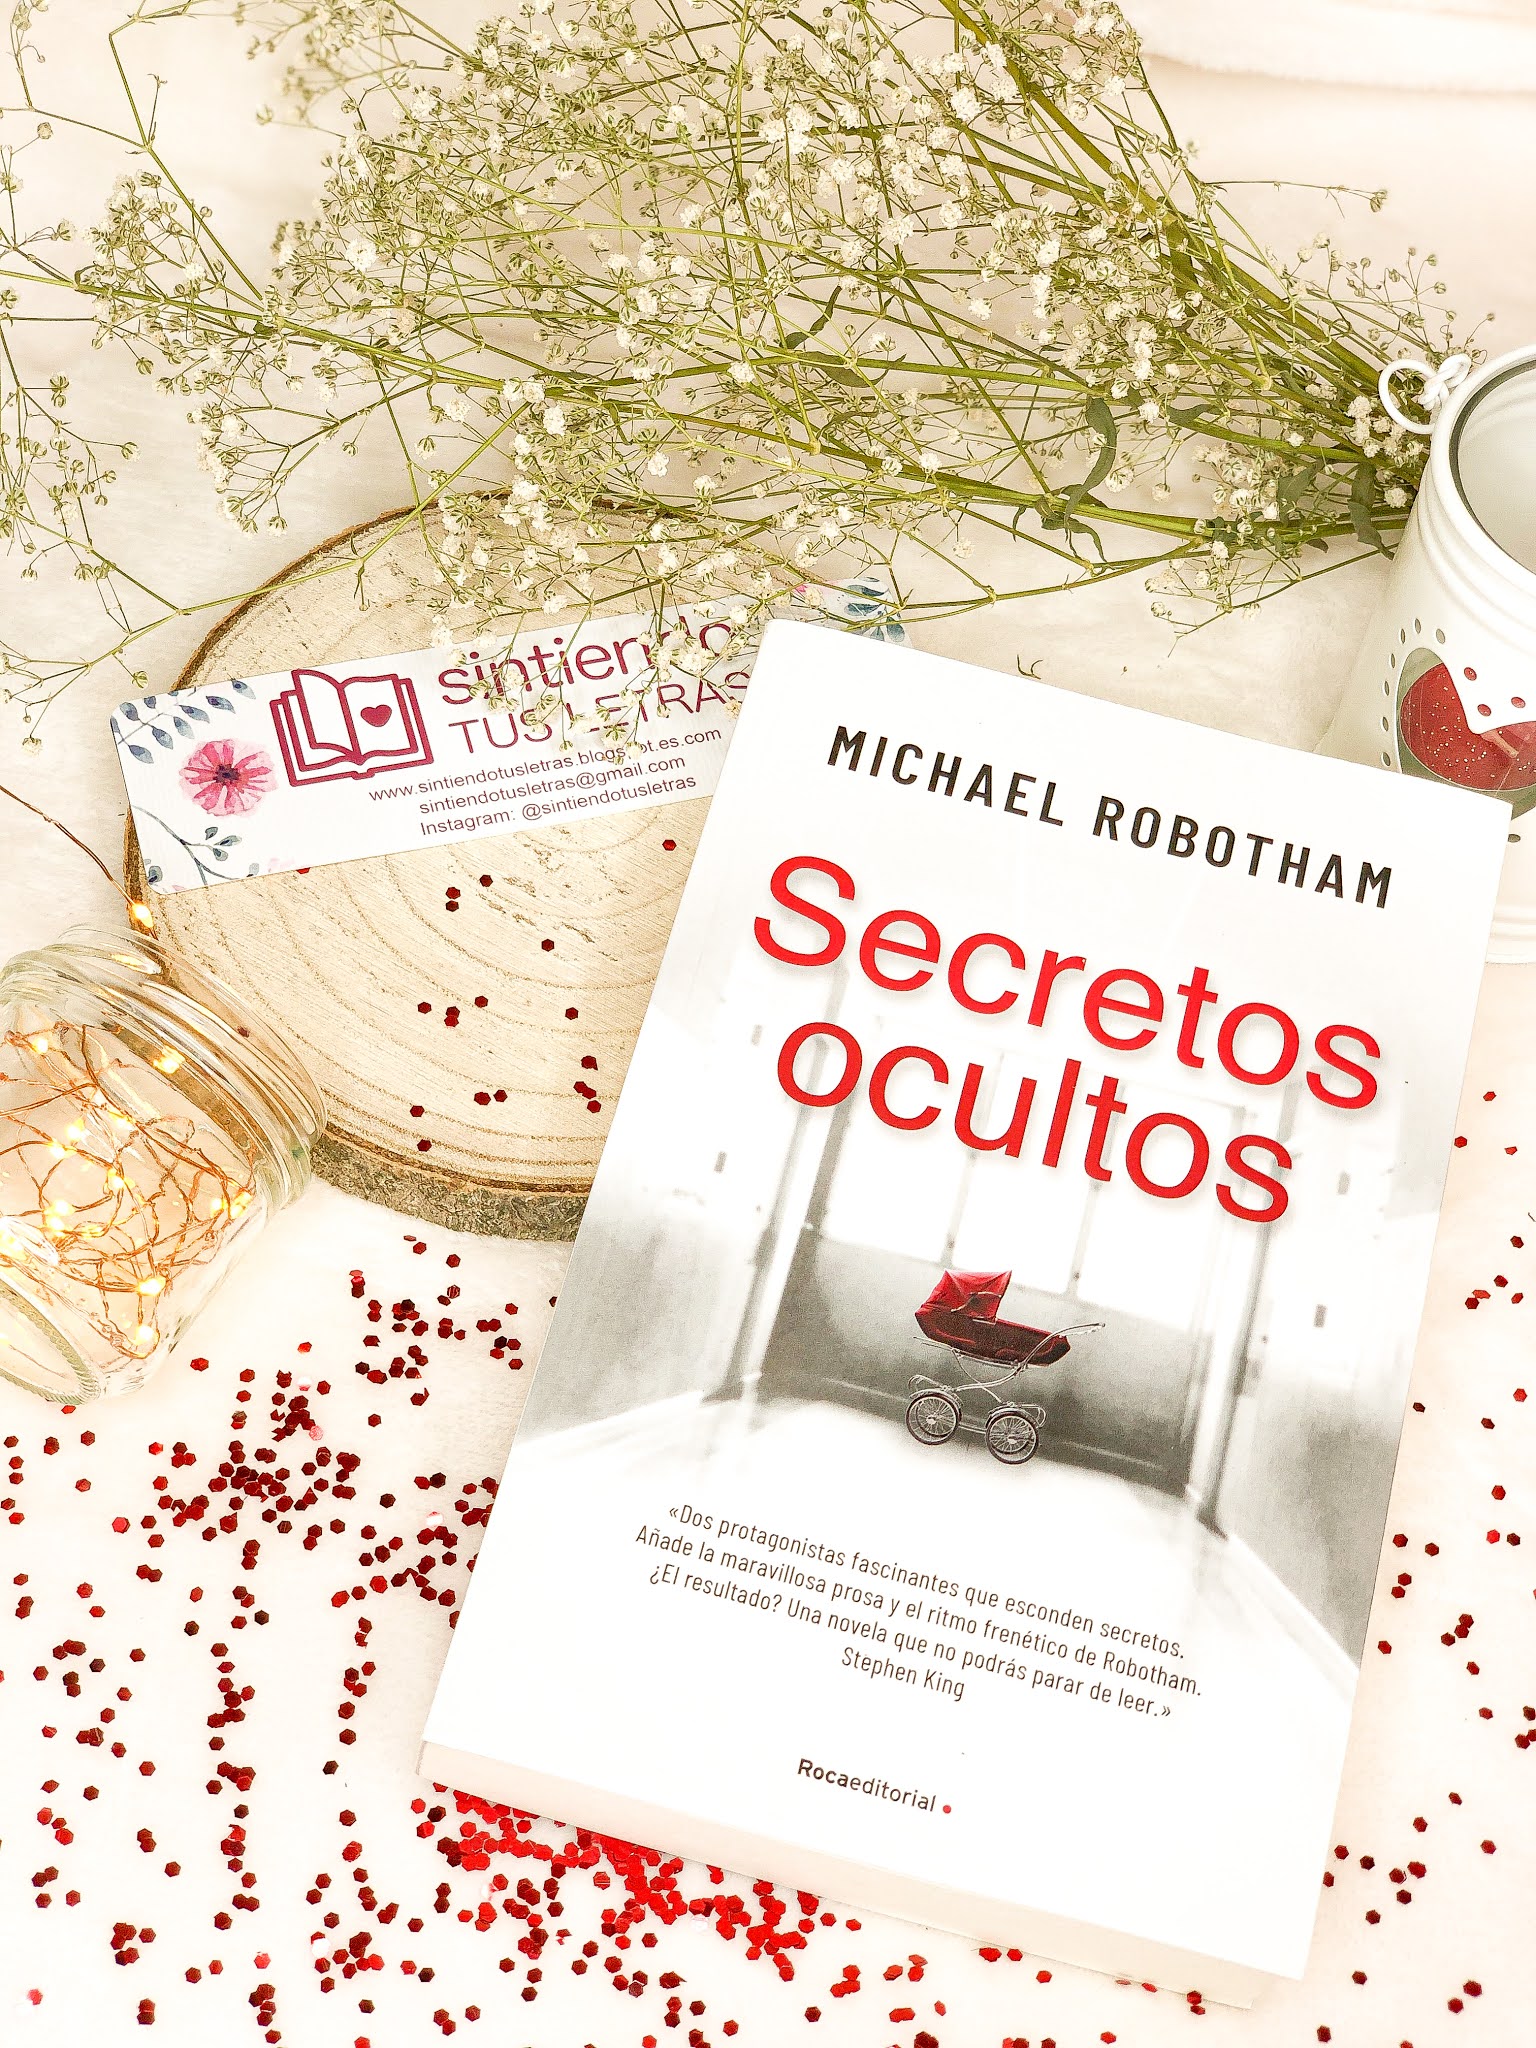 Reseña del libro Secretos ocultos de Michael Robotham